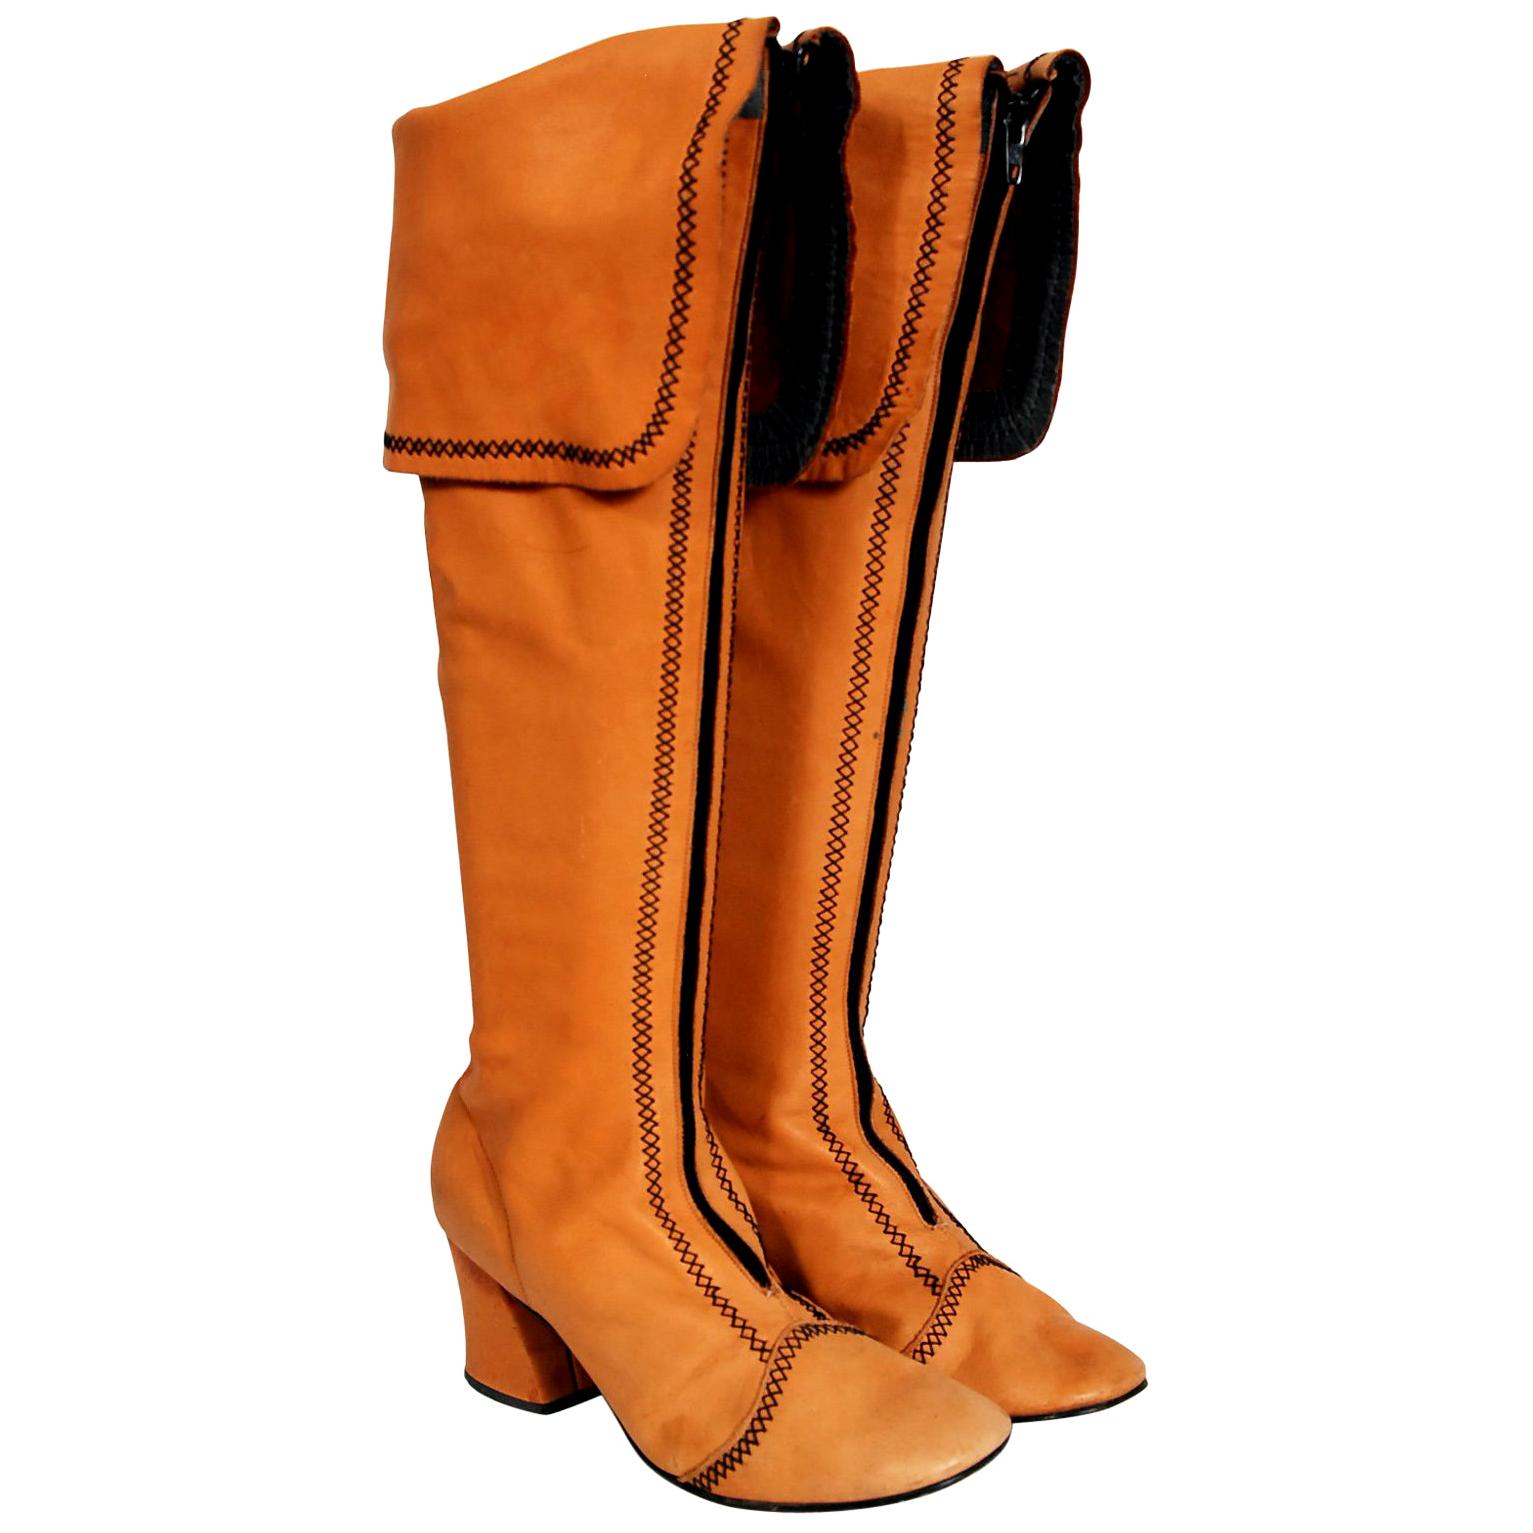 Buy > 1970s knee high boots > in stock